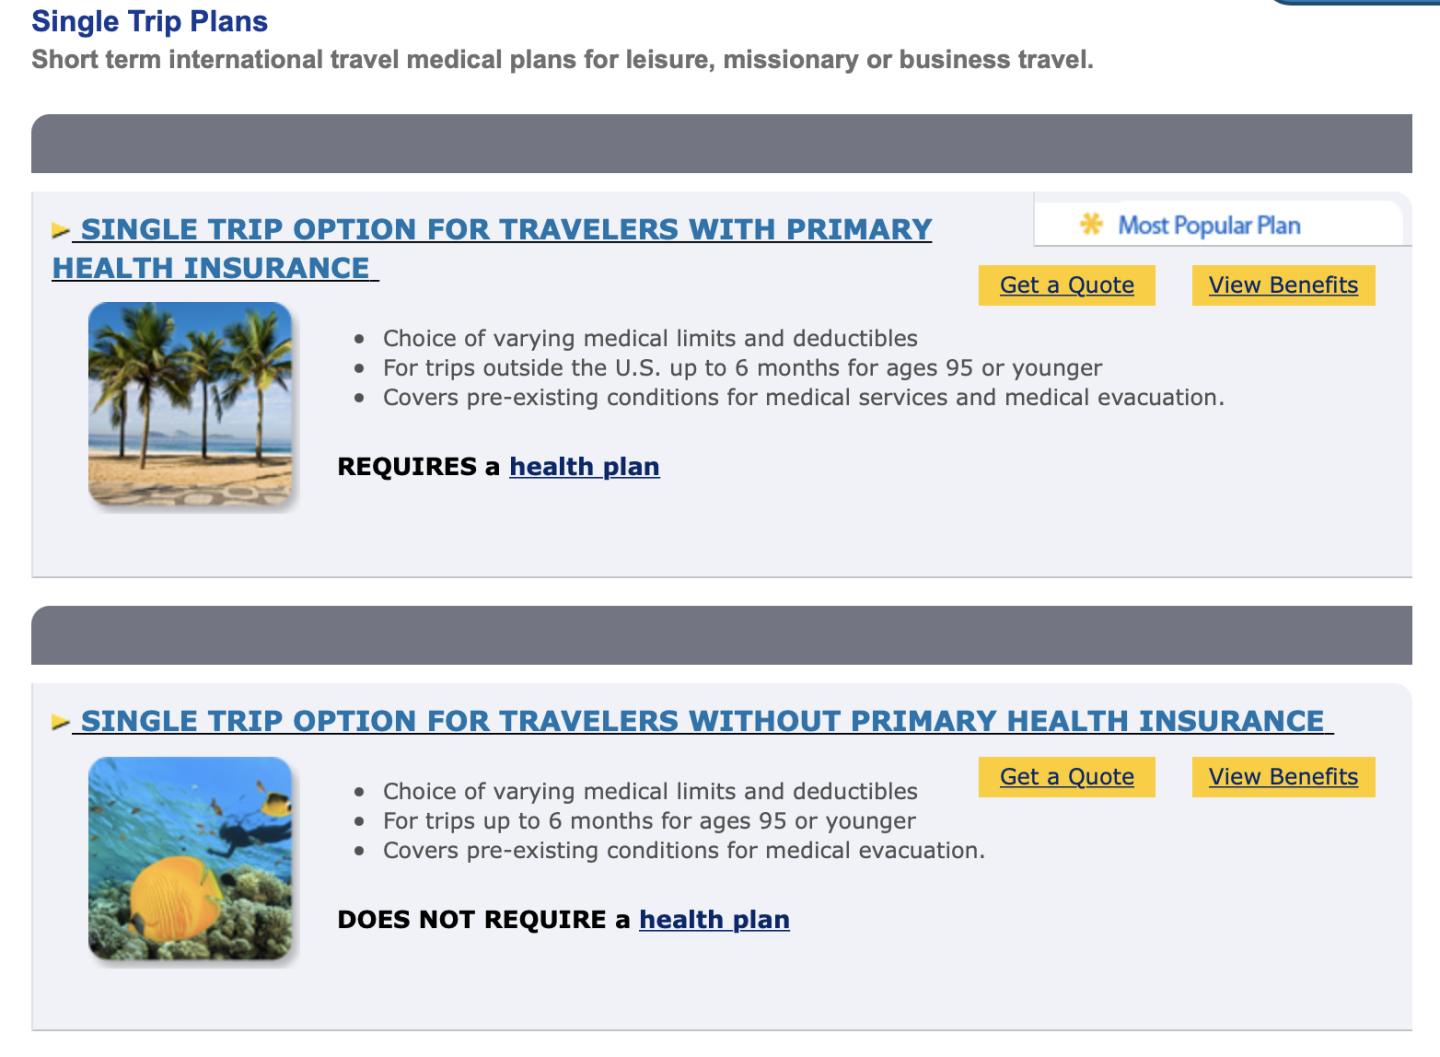 hth worldwide travel insurance reviews